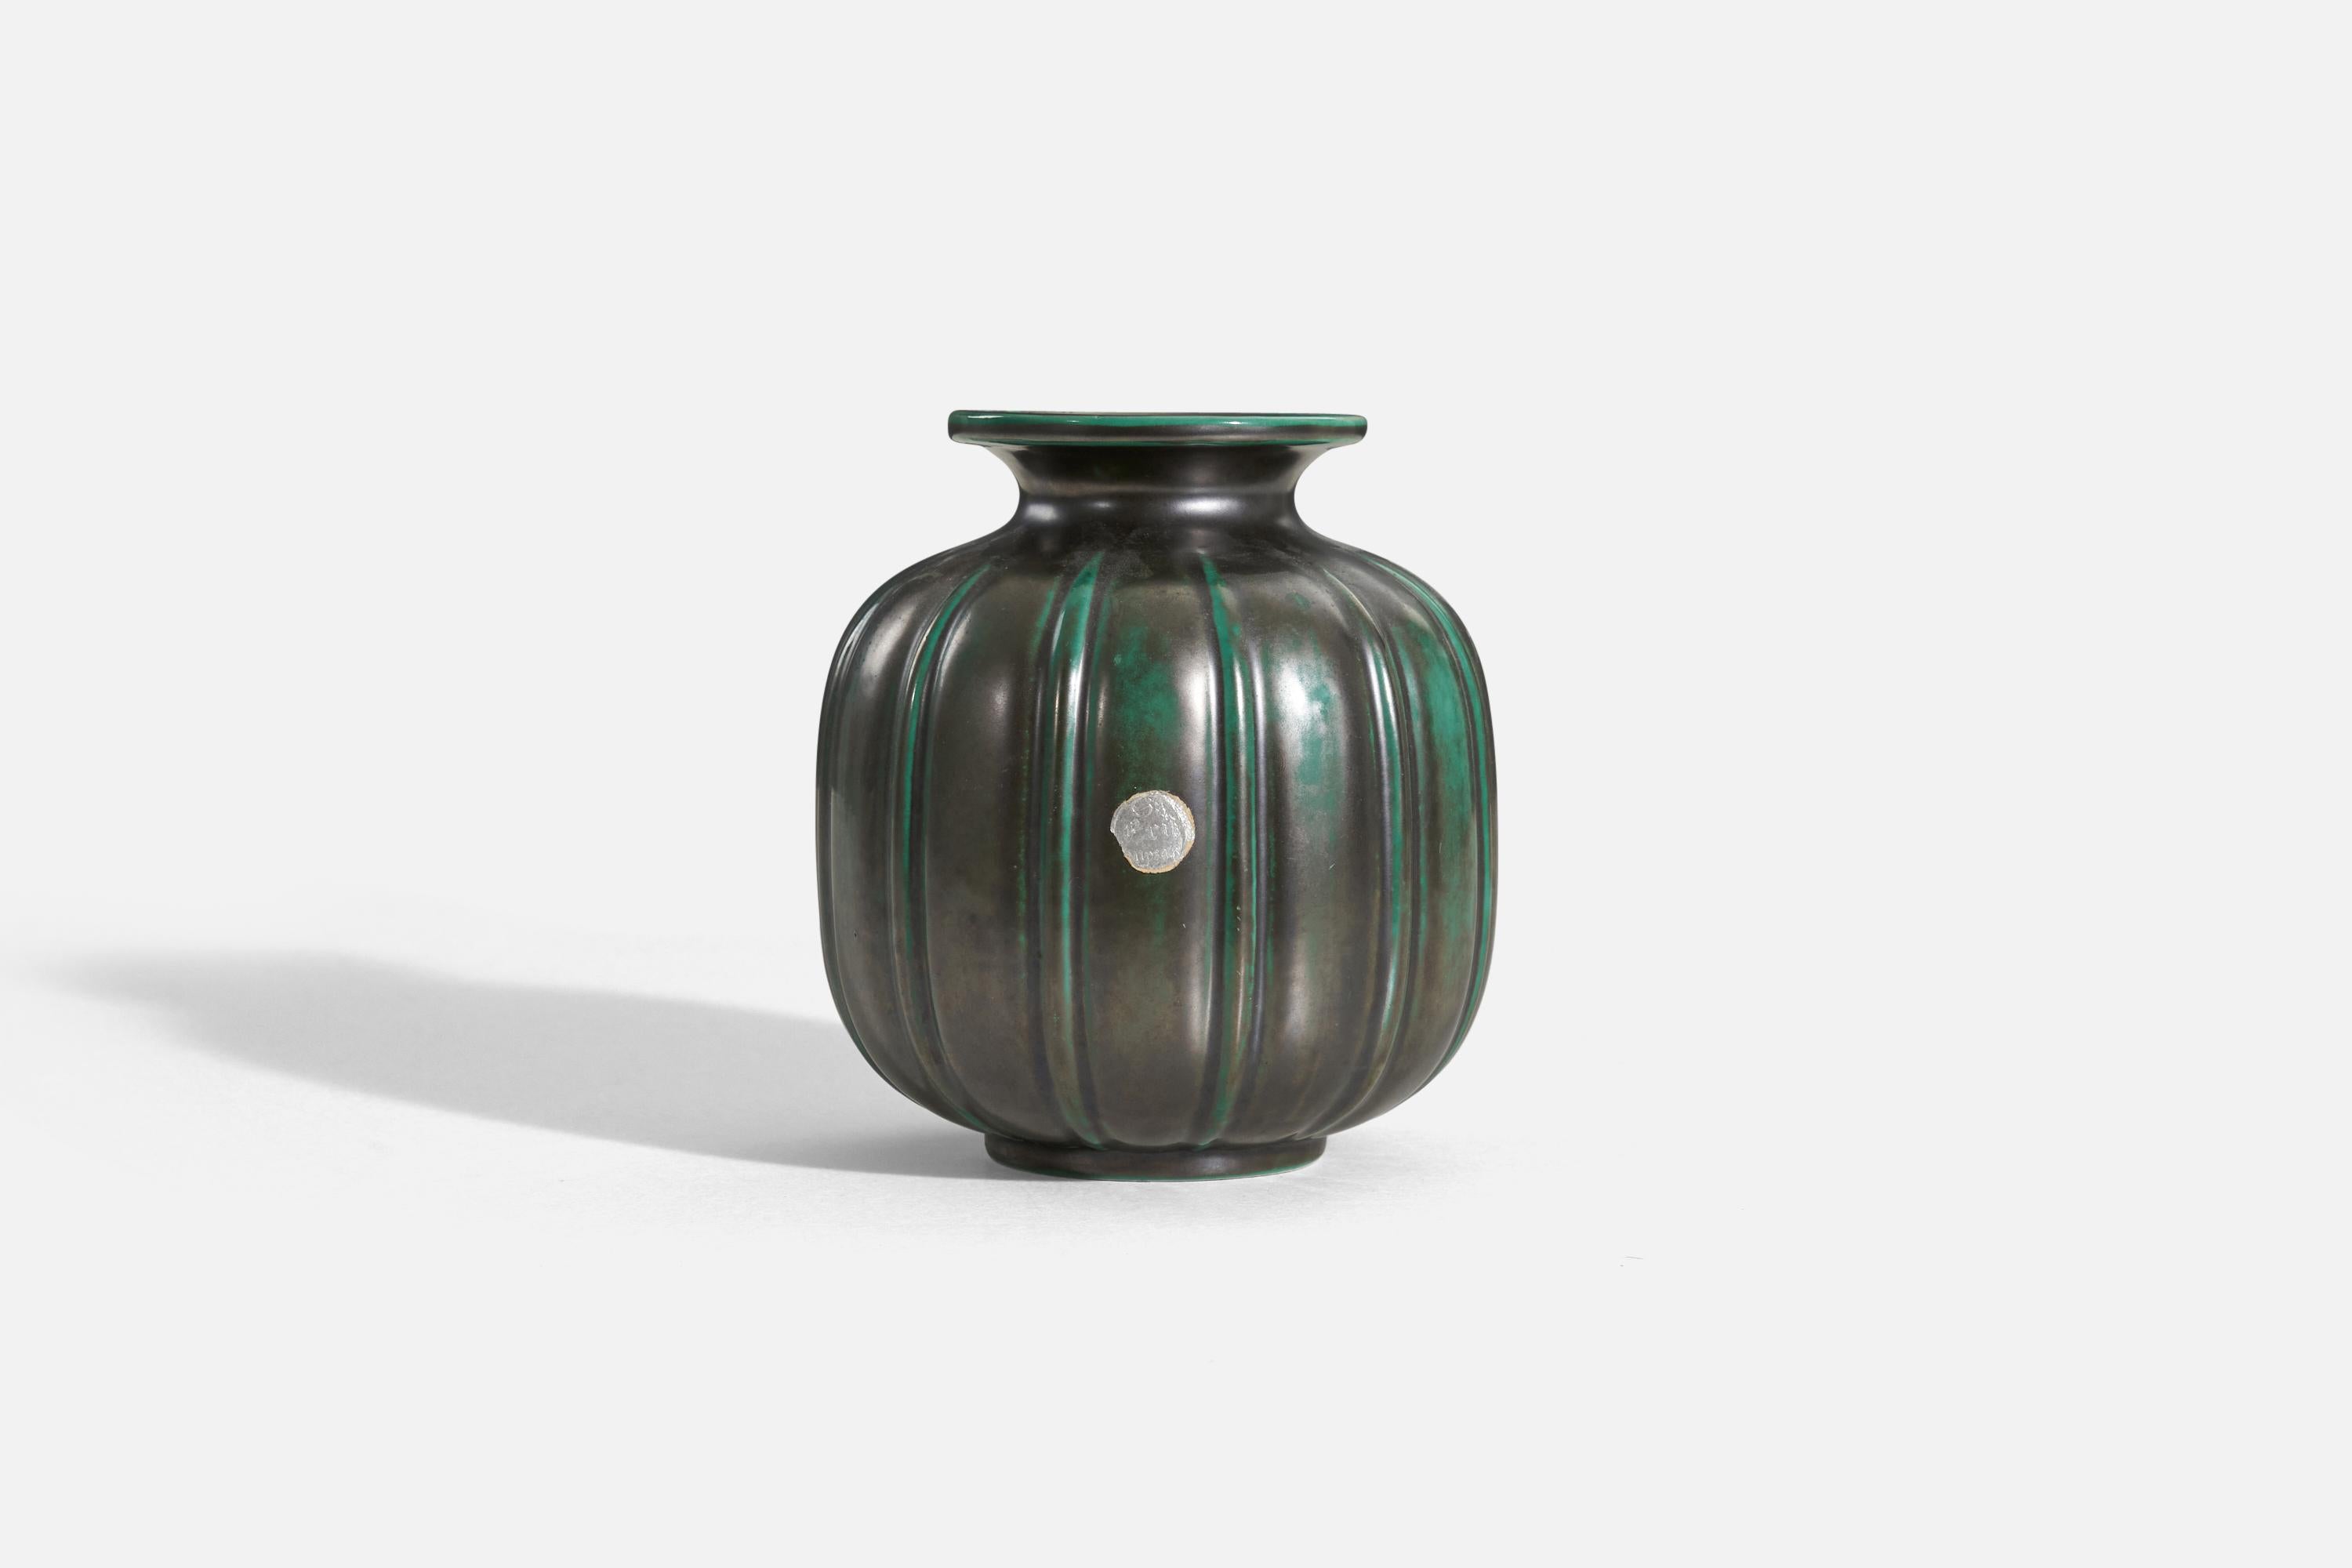 A green-glazed earthenware vase designed and produced by Upsala-Ekeby, Sweden, 1940s.

